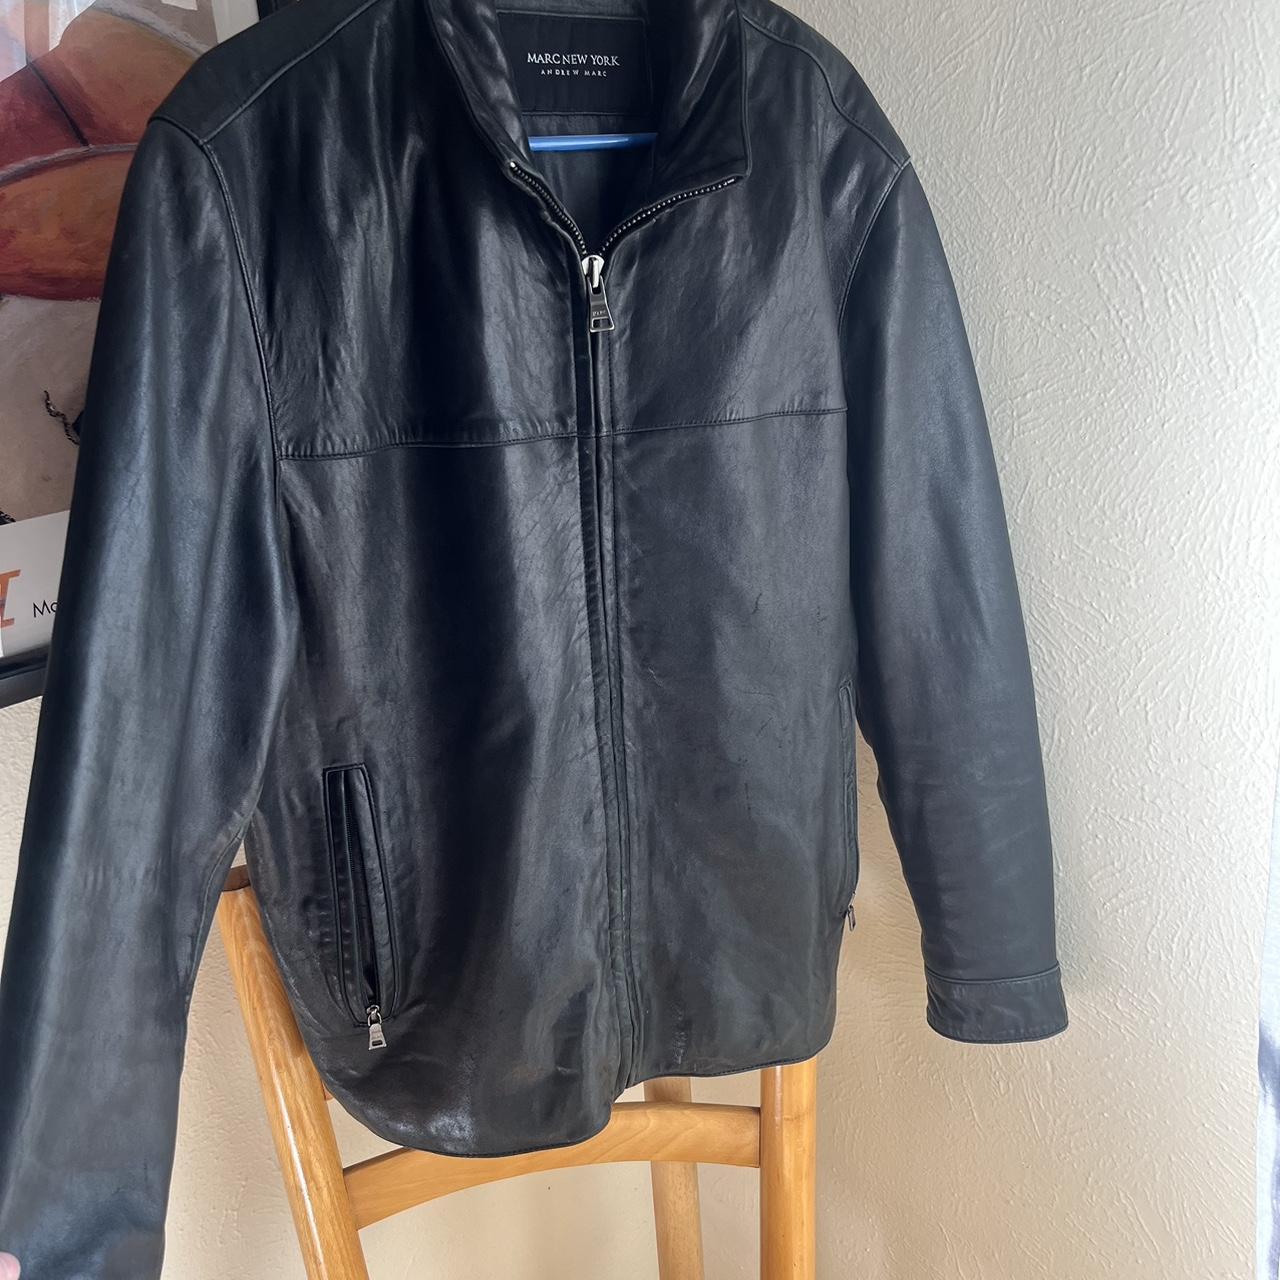 Mark New York leather jacket Black great... - Depop